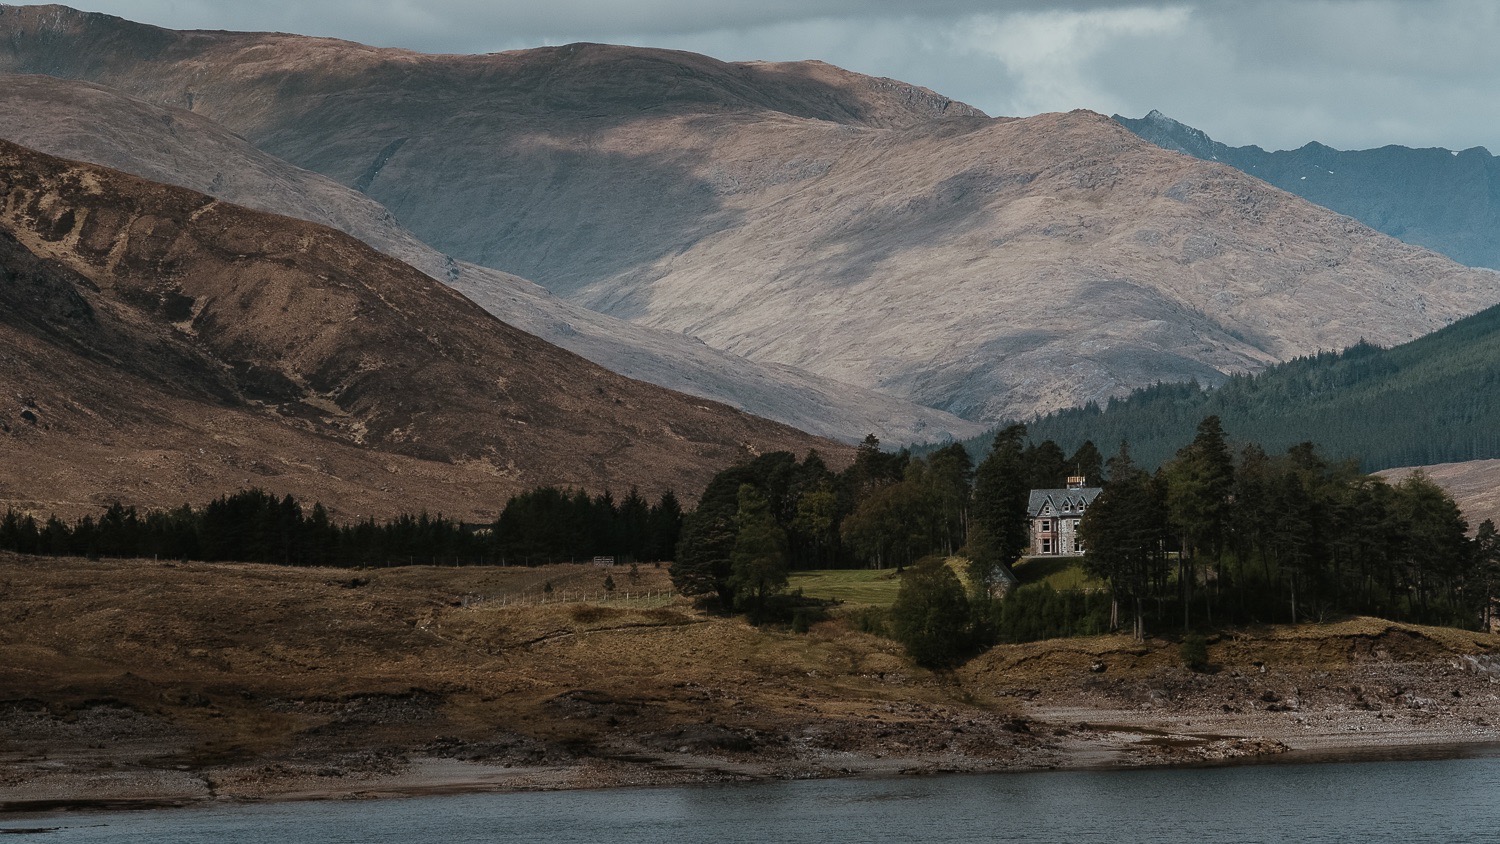 0038-scotland-tamron-le monde de la photo-paysage-20190509122706-compress.jpg